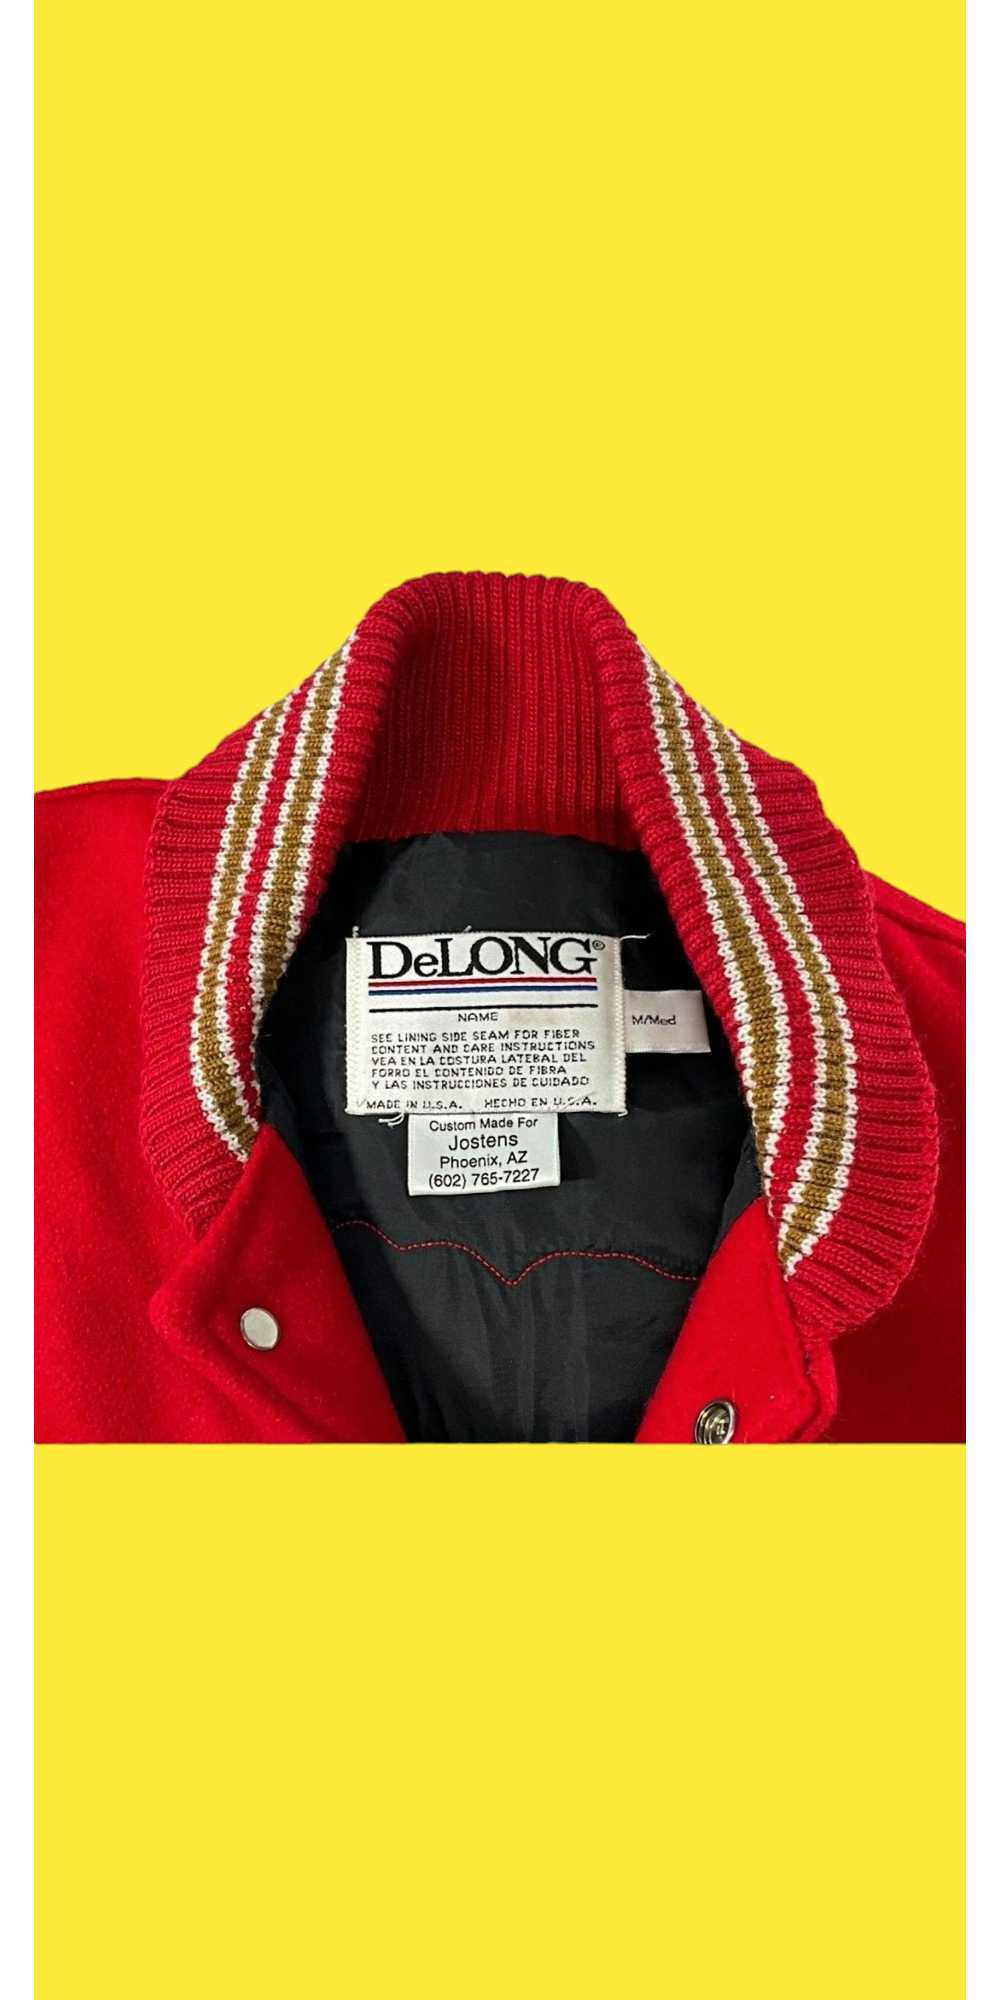 Delong Varsity Jackets Vintage red varsity jacket - image 3